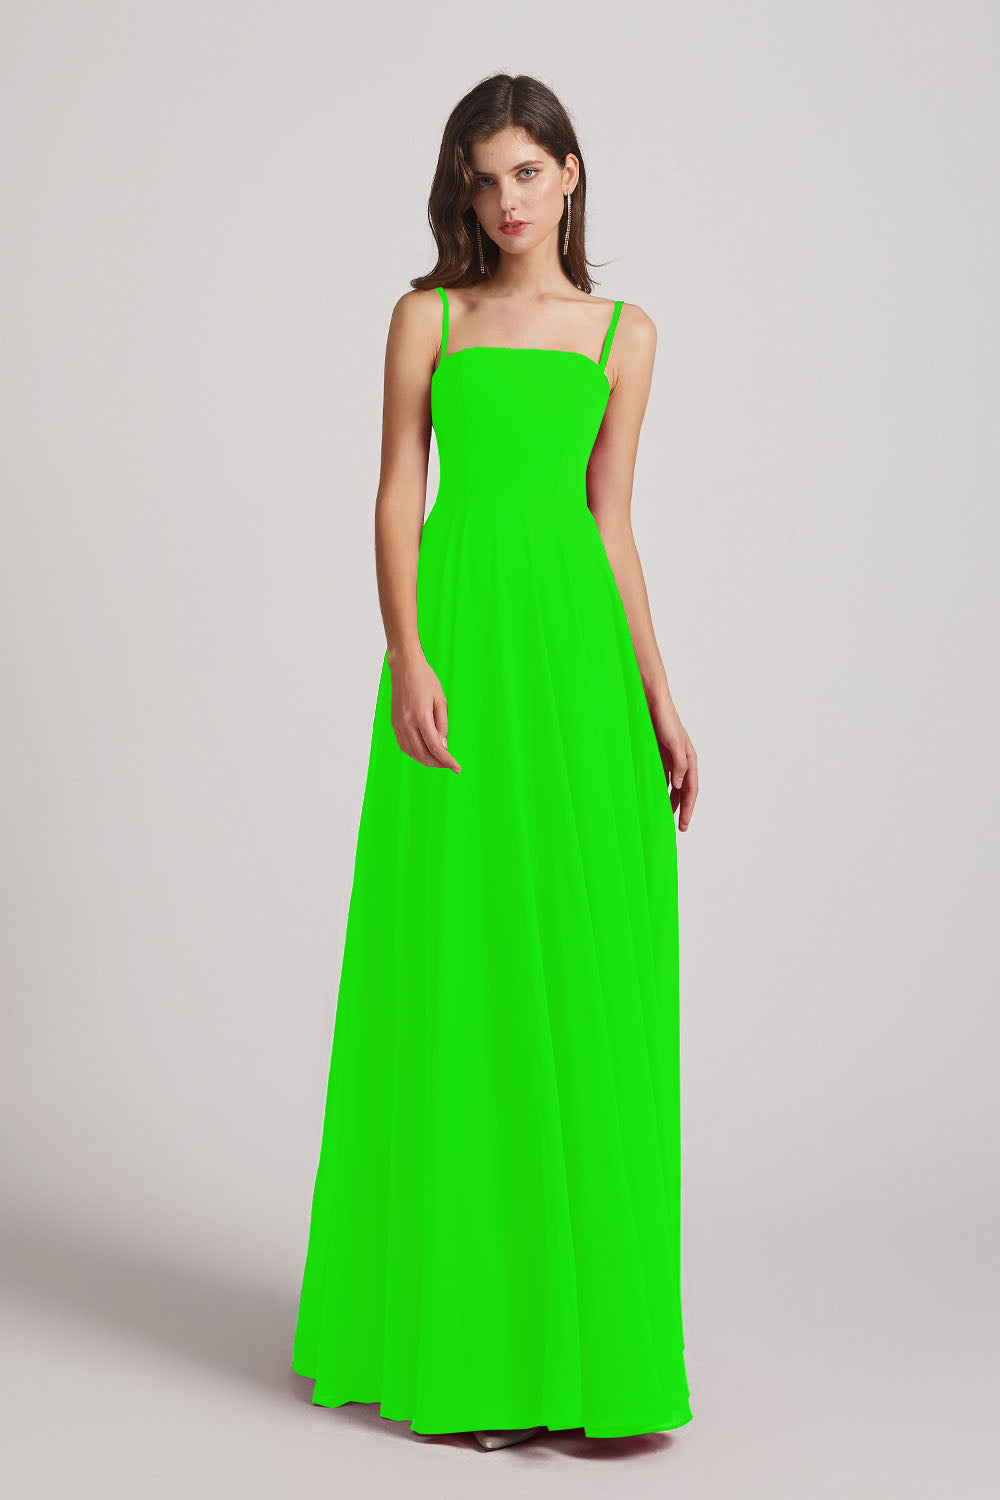 Alfa Bridal Lime Green Spaghetti Straps A-Line Chiffon Pleated Bridesmaid Dresses (AF0063)